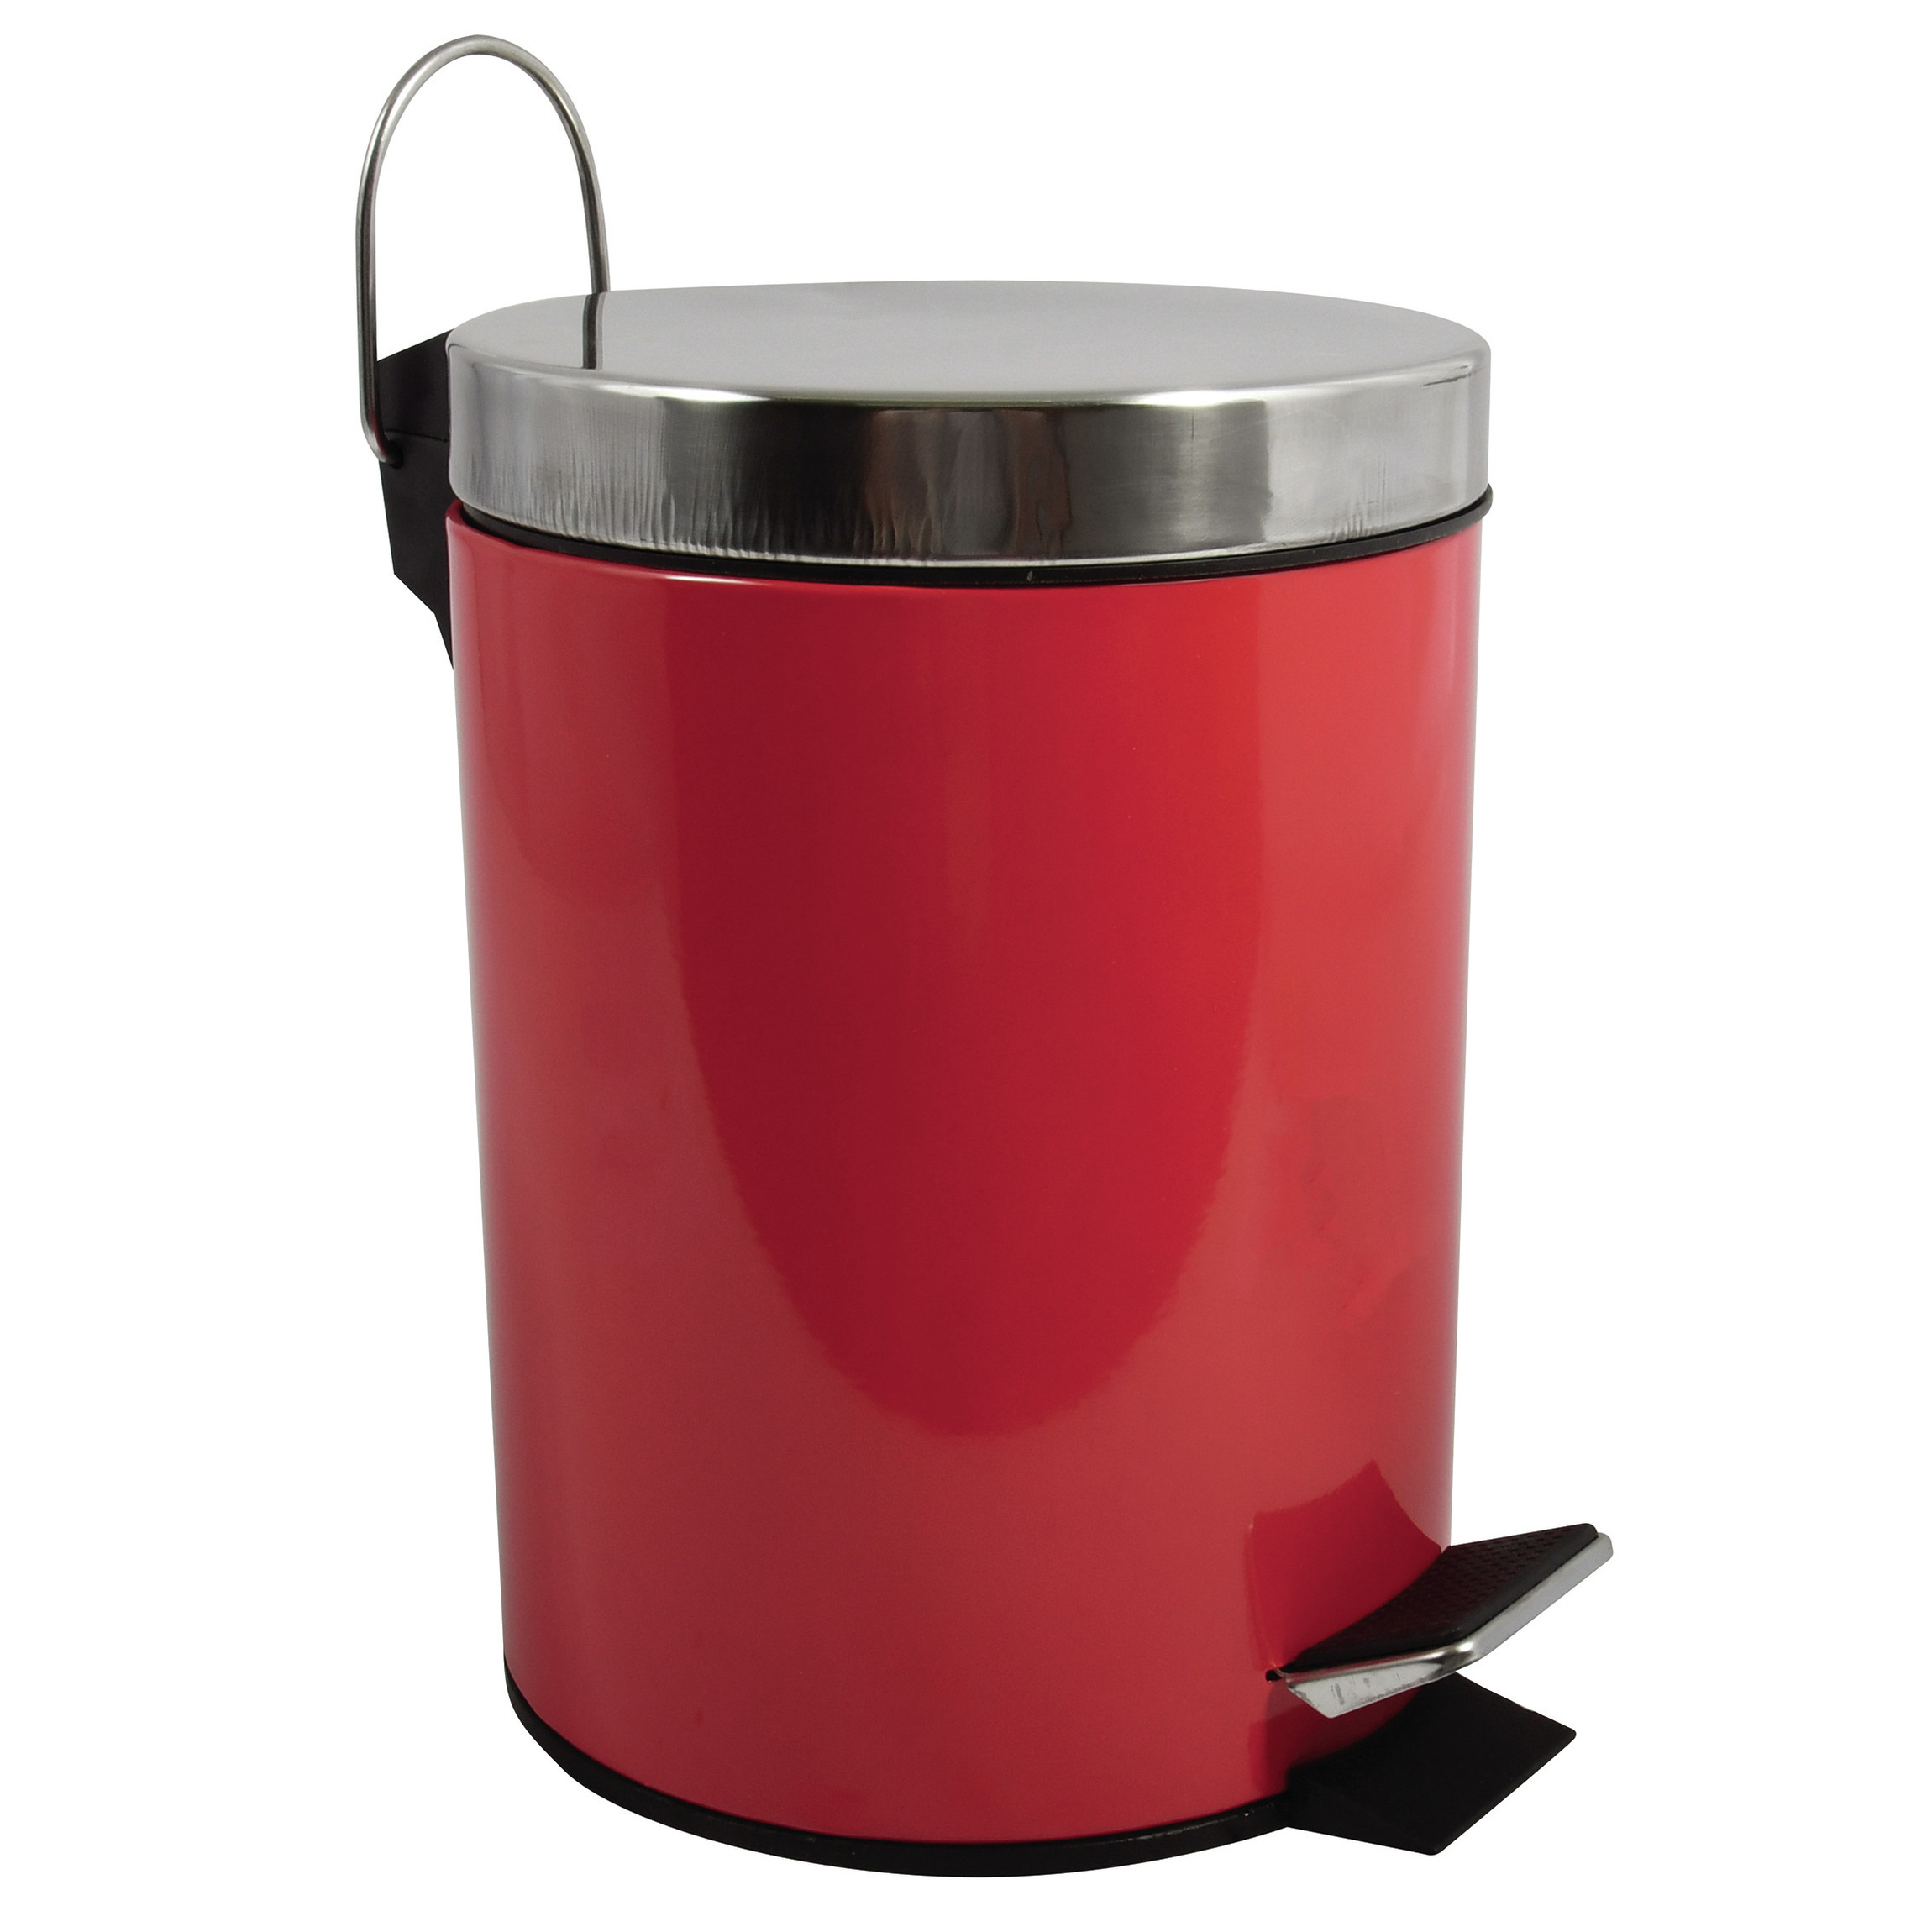 Prullenbak-pedaalemmer metaal rood 3 liter 17 x 25 cm Badkamer-toilet